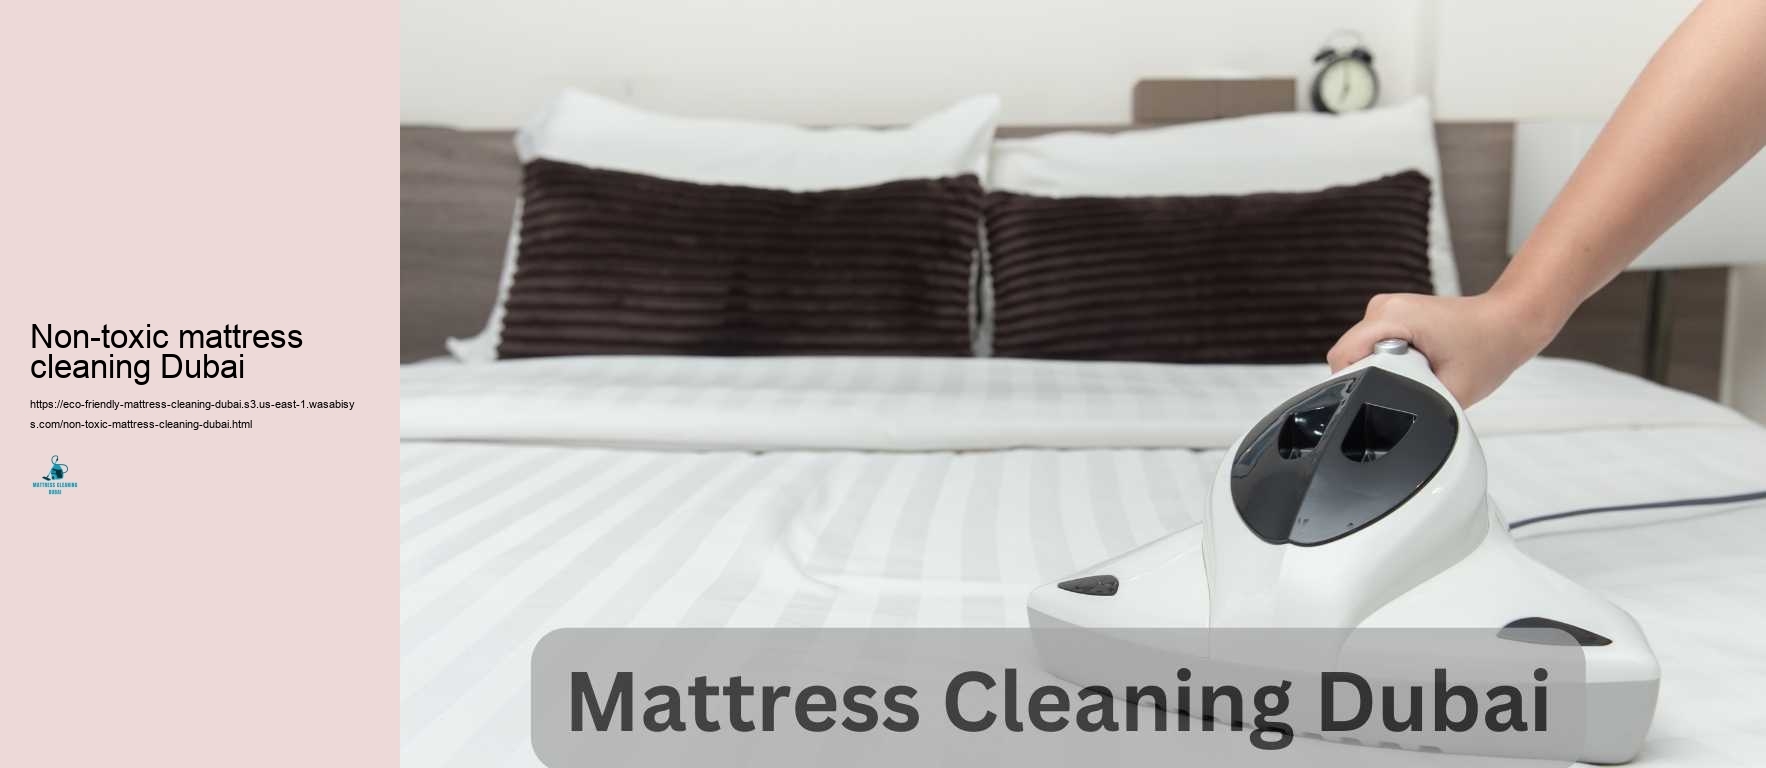 Non-toxic mattress cleaning Dubai